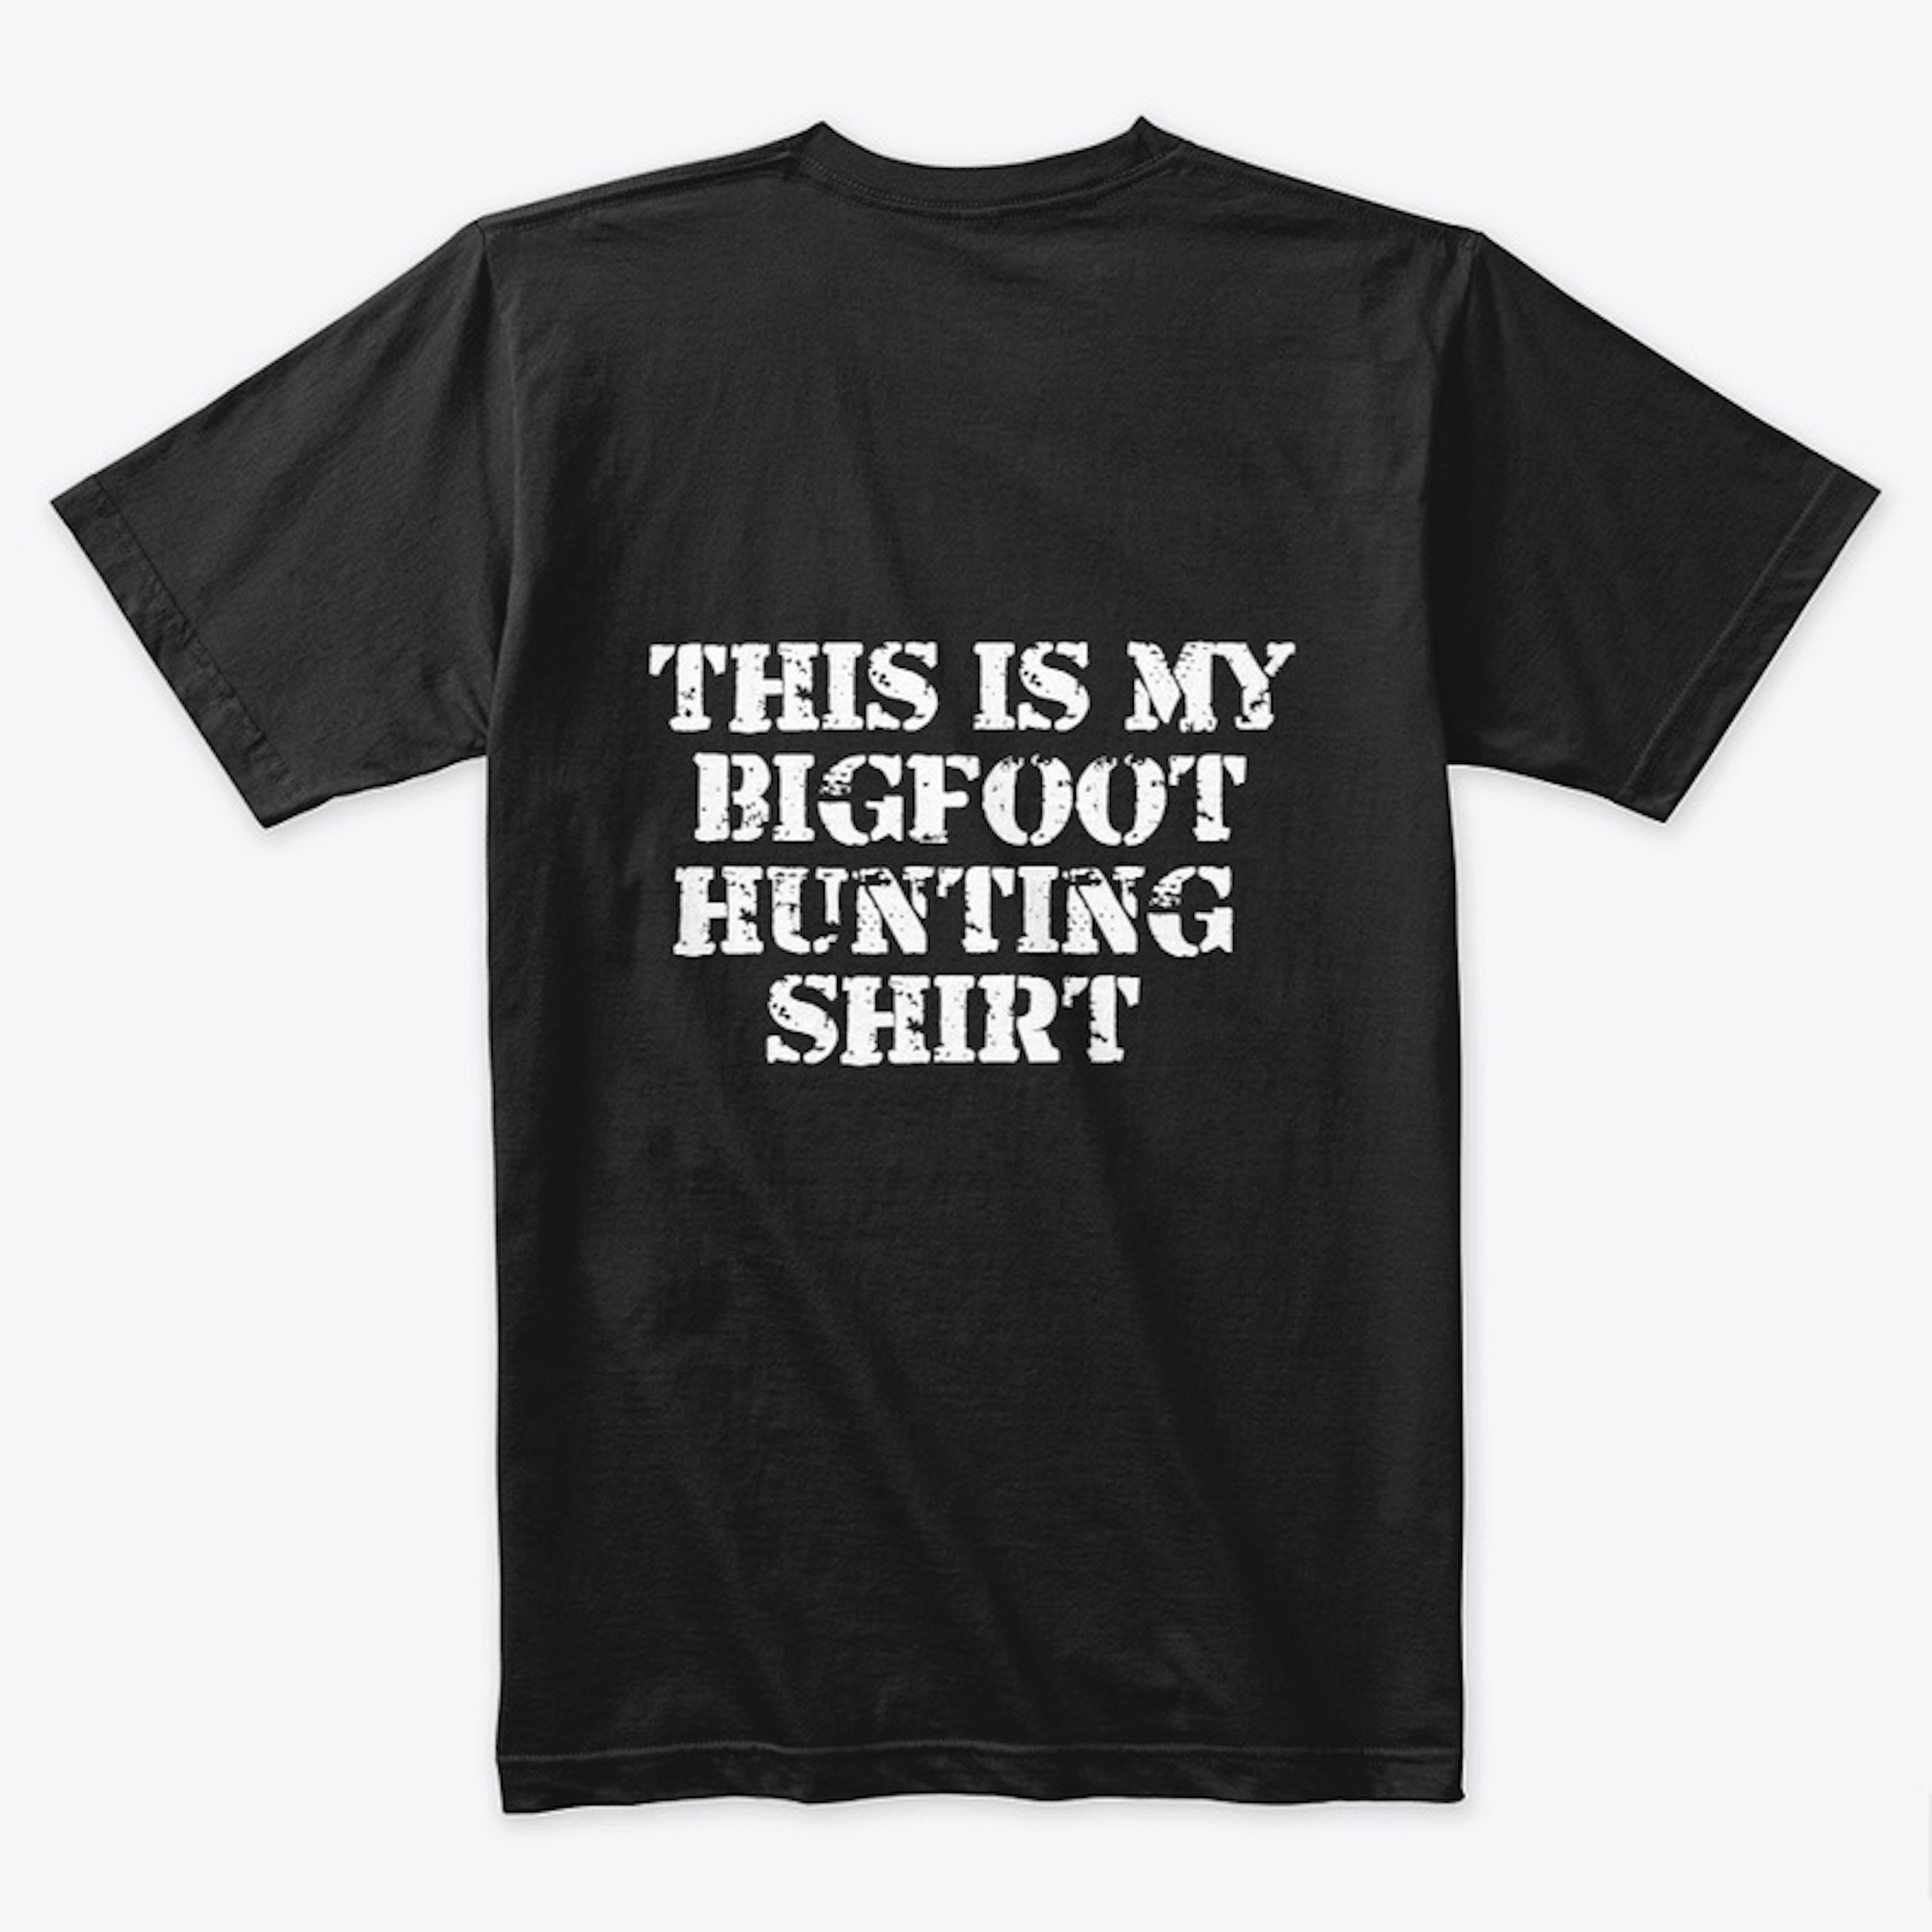 Bigfoot Hunting Shirt